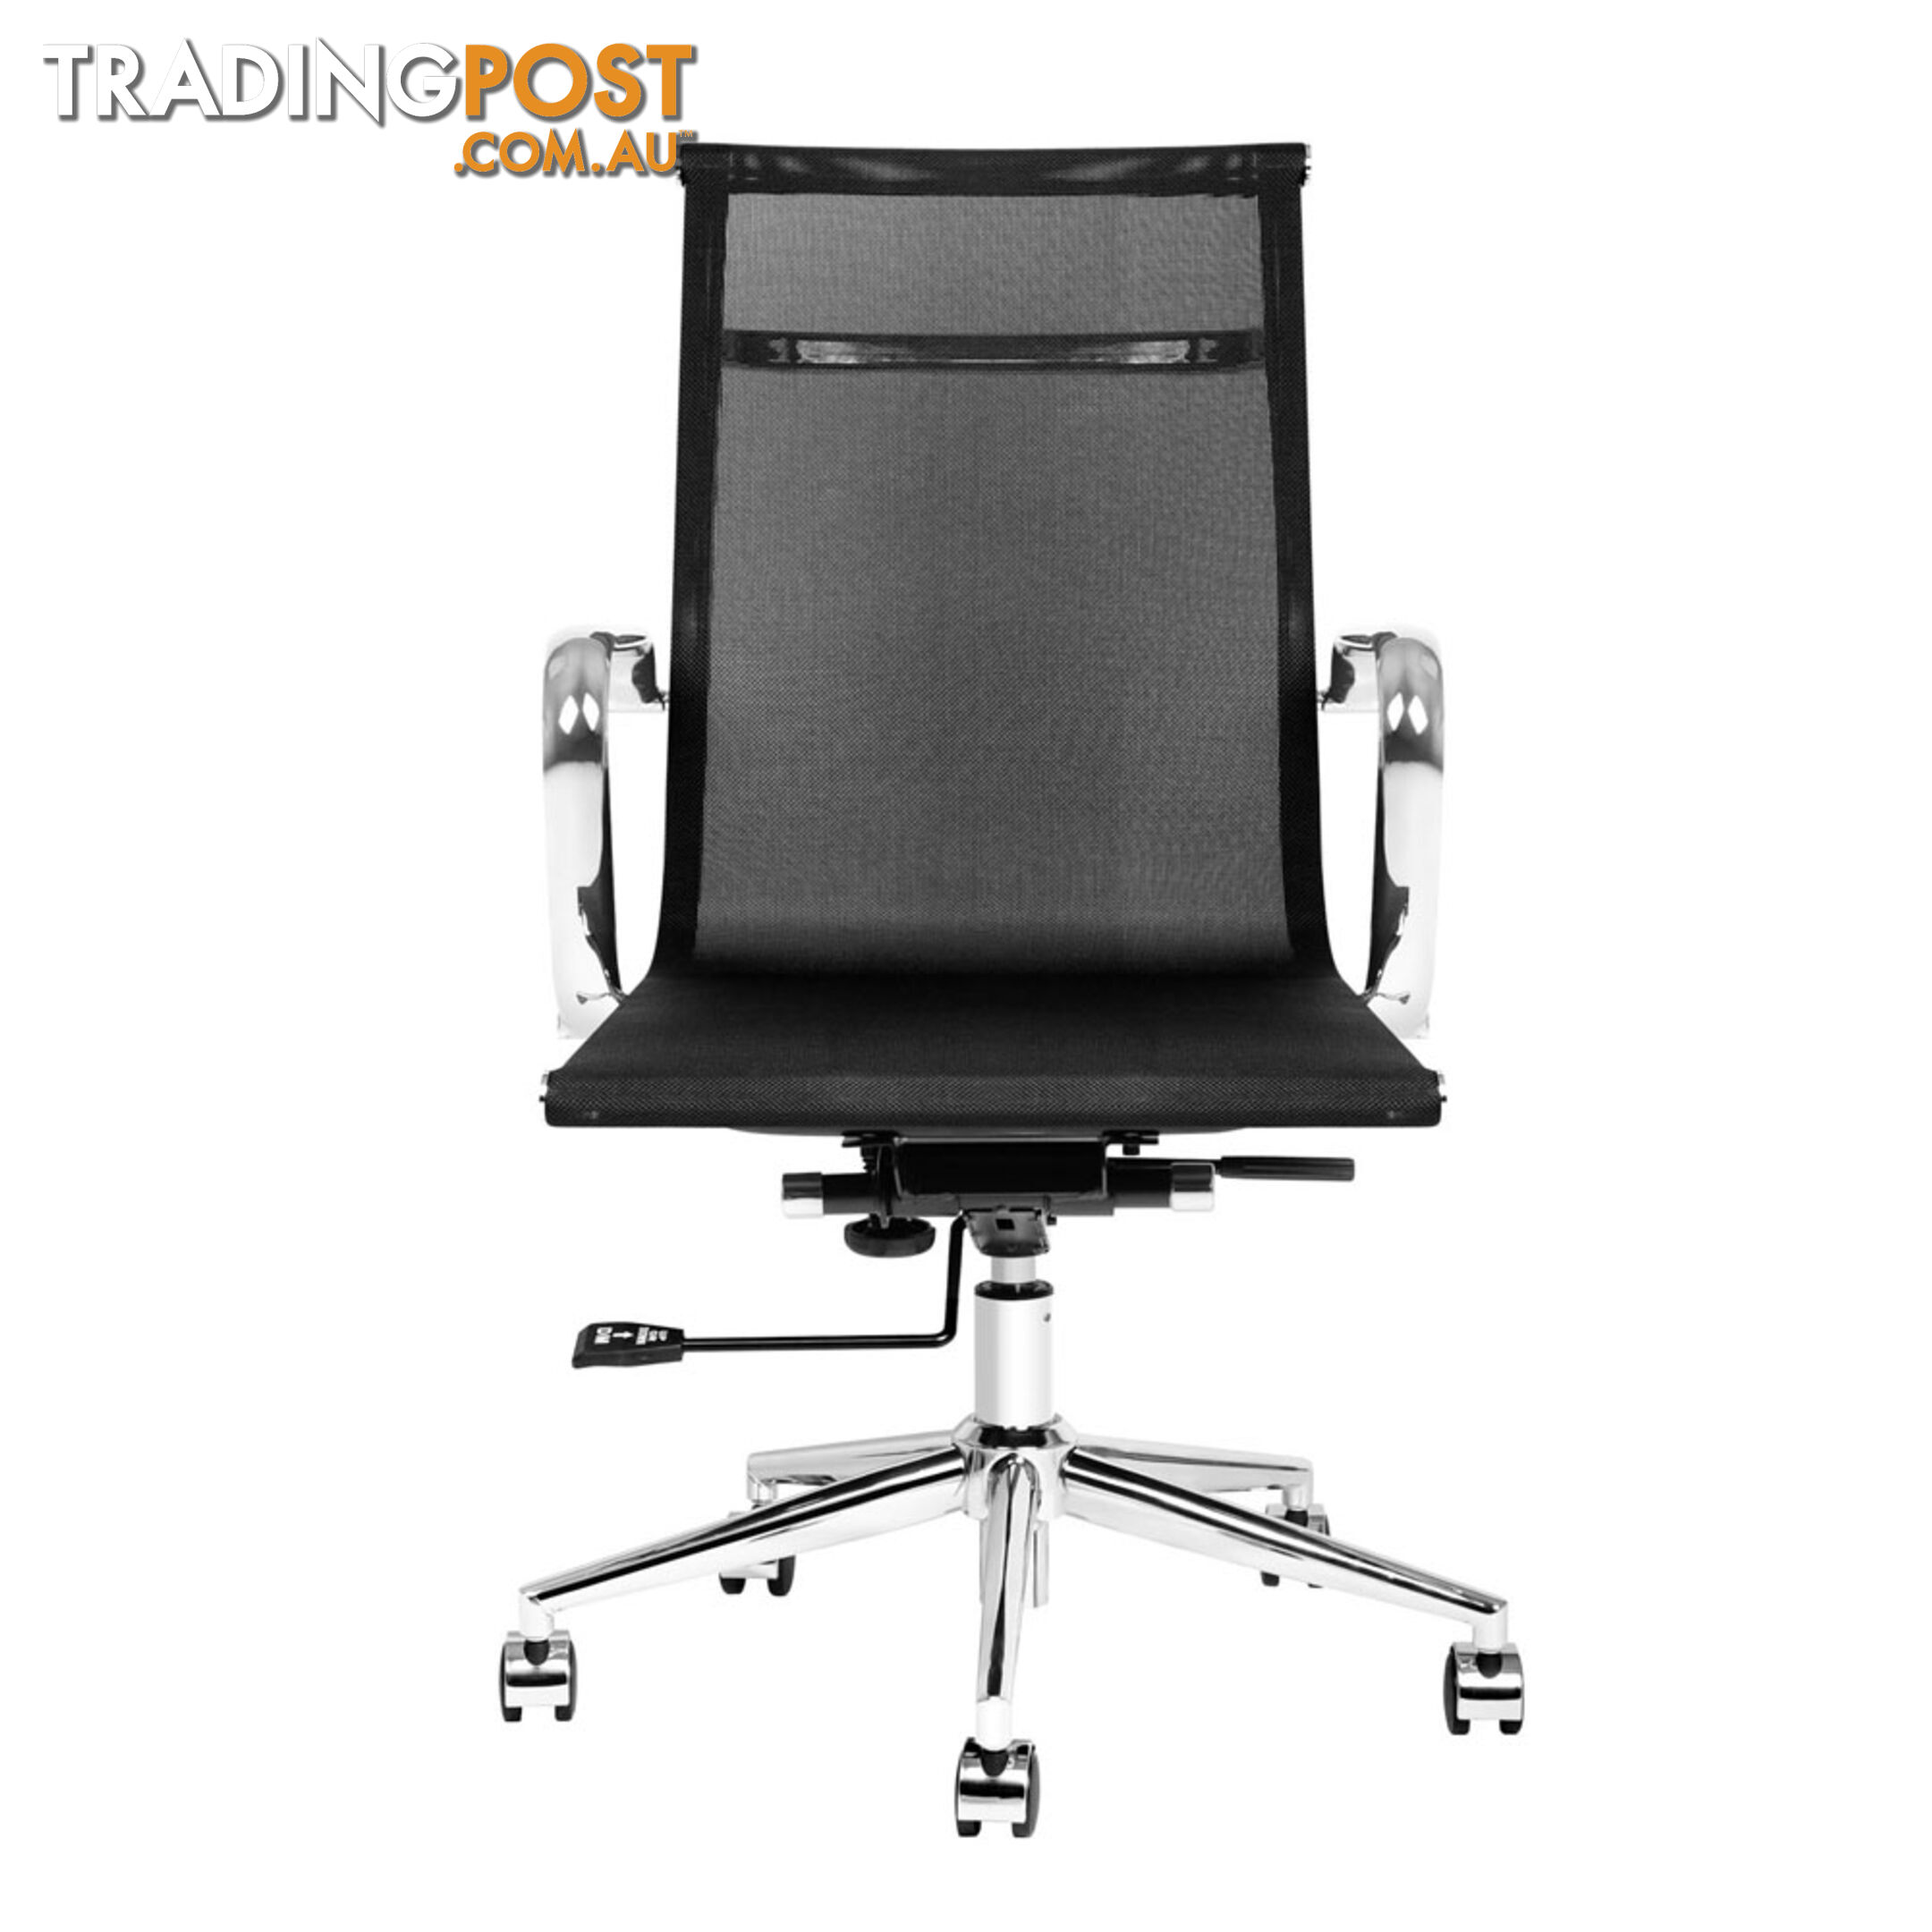 Executive Mesh Office Computer Chair Black